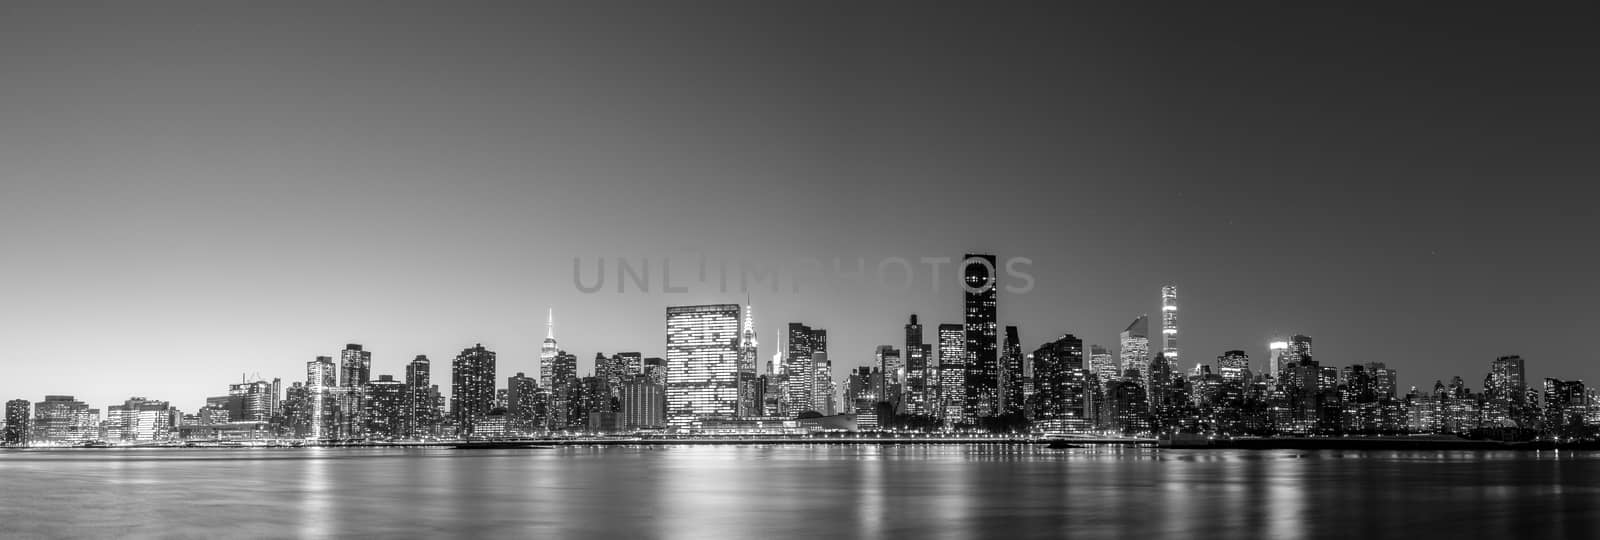 Midtown Manhattan skyline panoramic view by oliverfoerstner